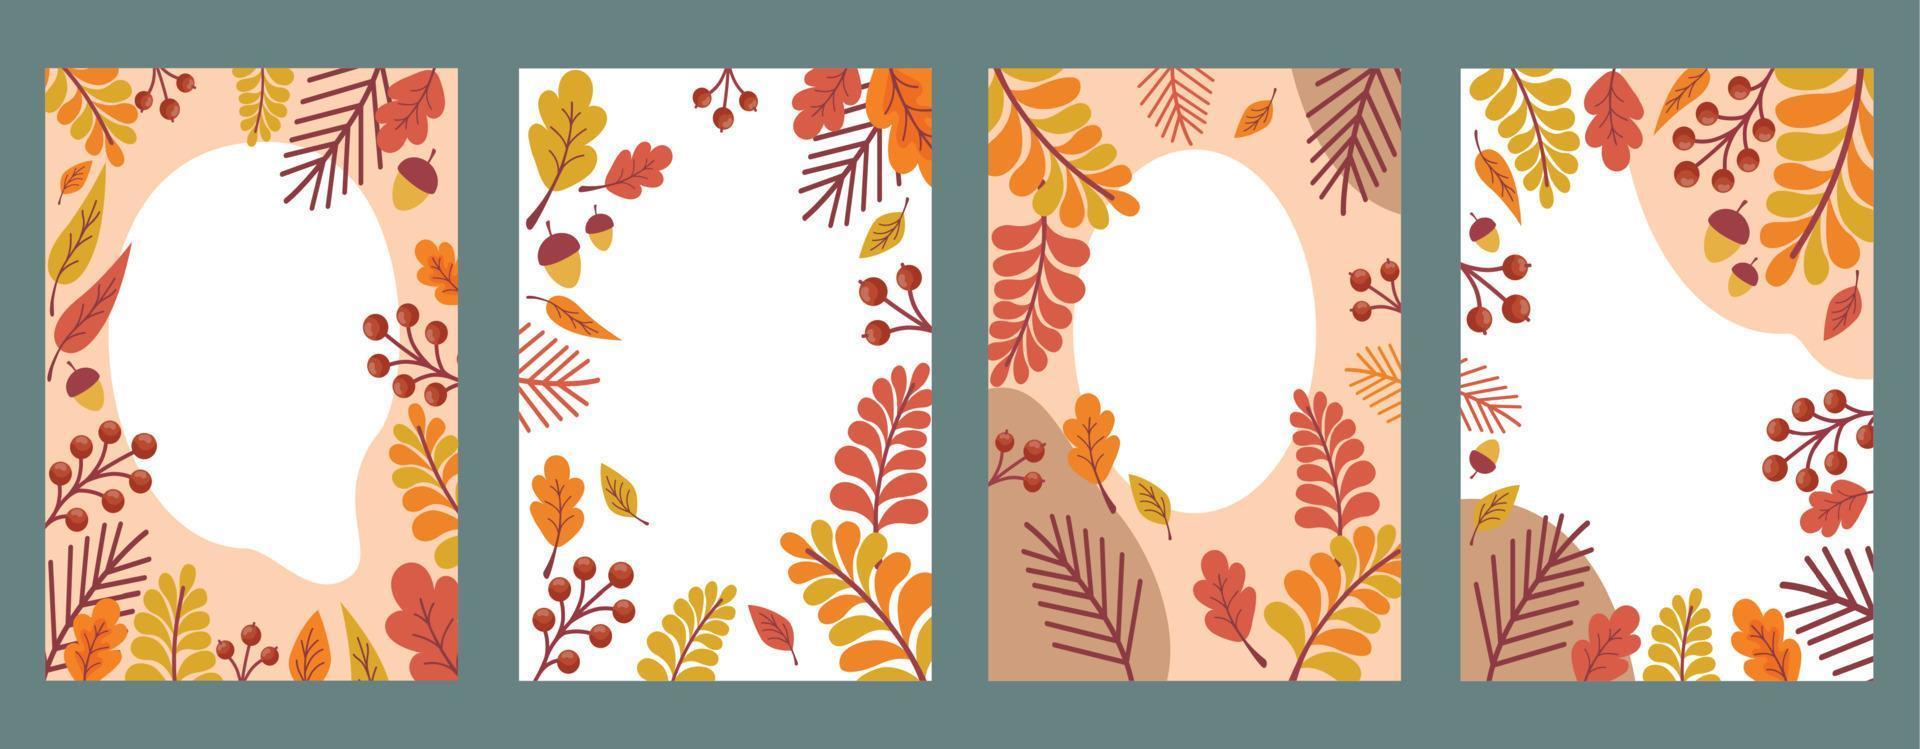 Plantillas de arte otoño genéricas de moda abstractas. Adecuado para portada, banner web, cartel, folleto, cartel, postal - vector